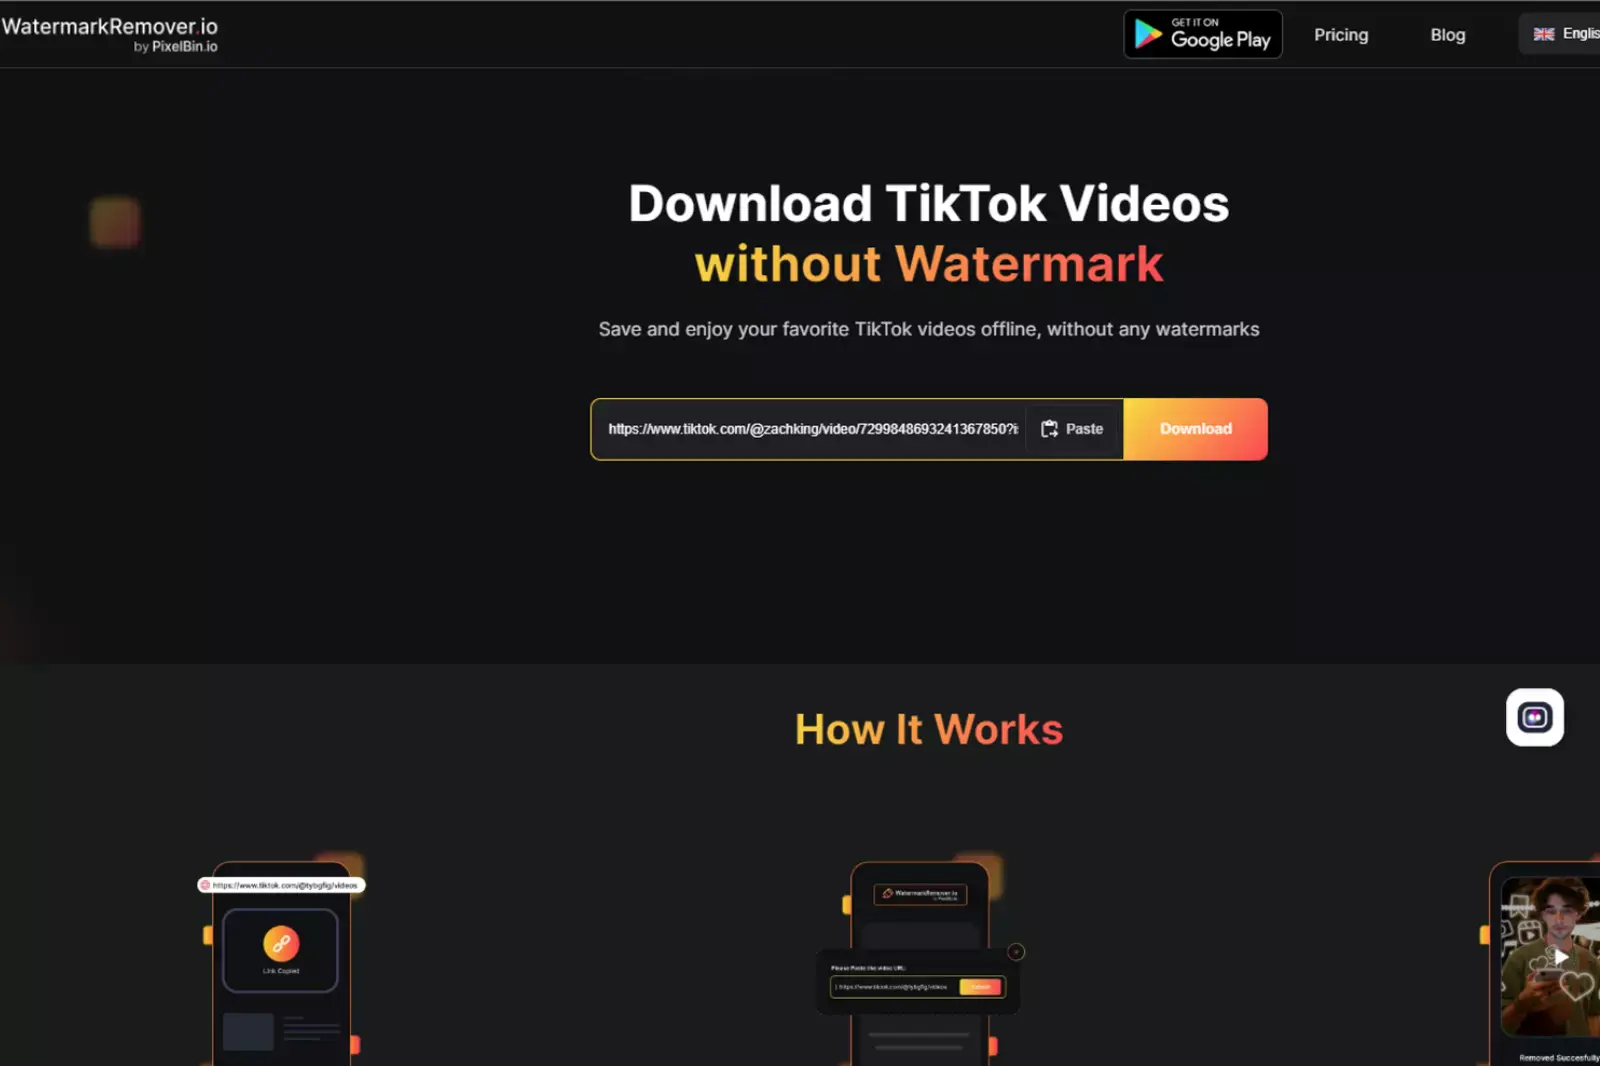 Copy the URL of the TikTok video